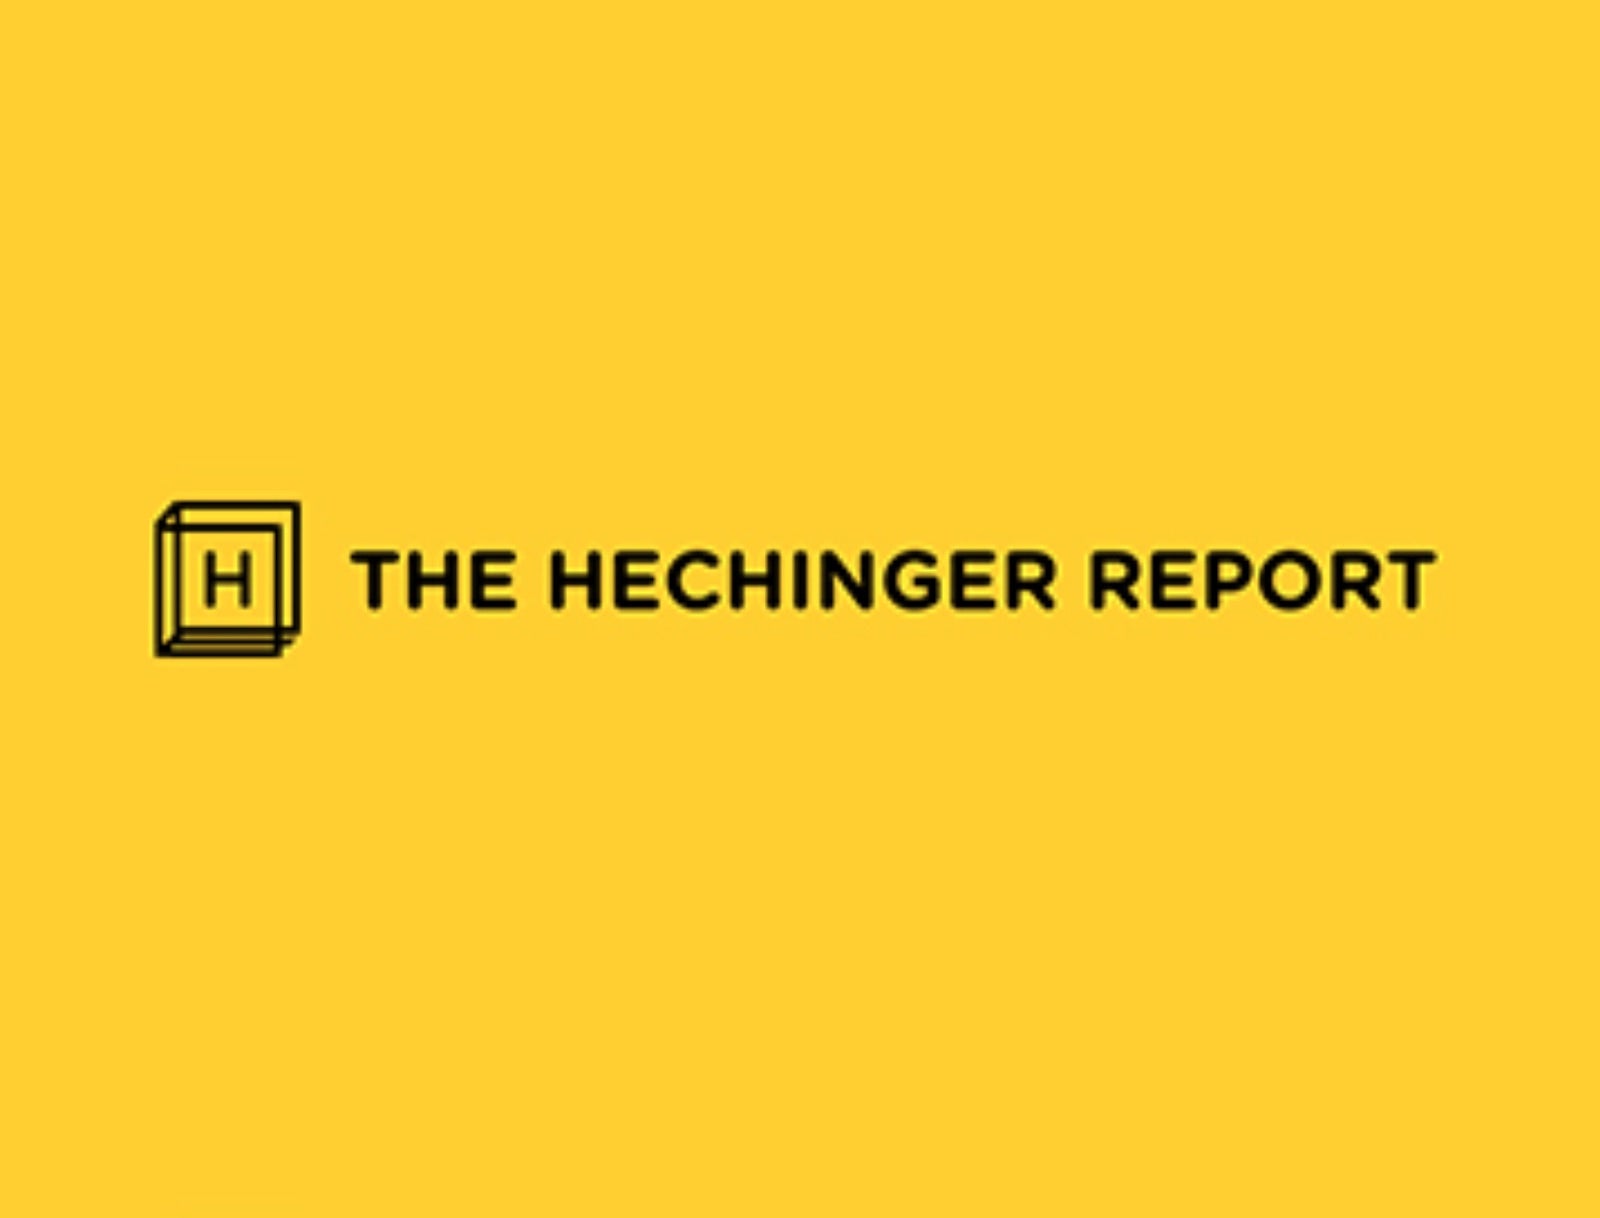 Hechinger-Report logo